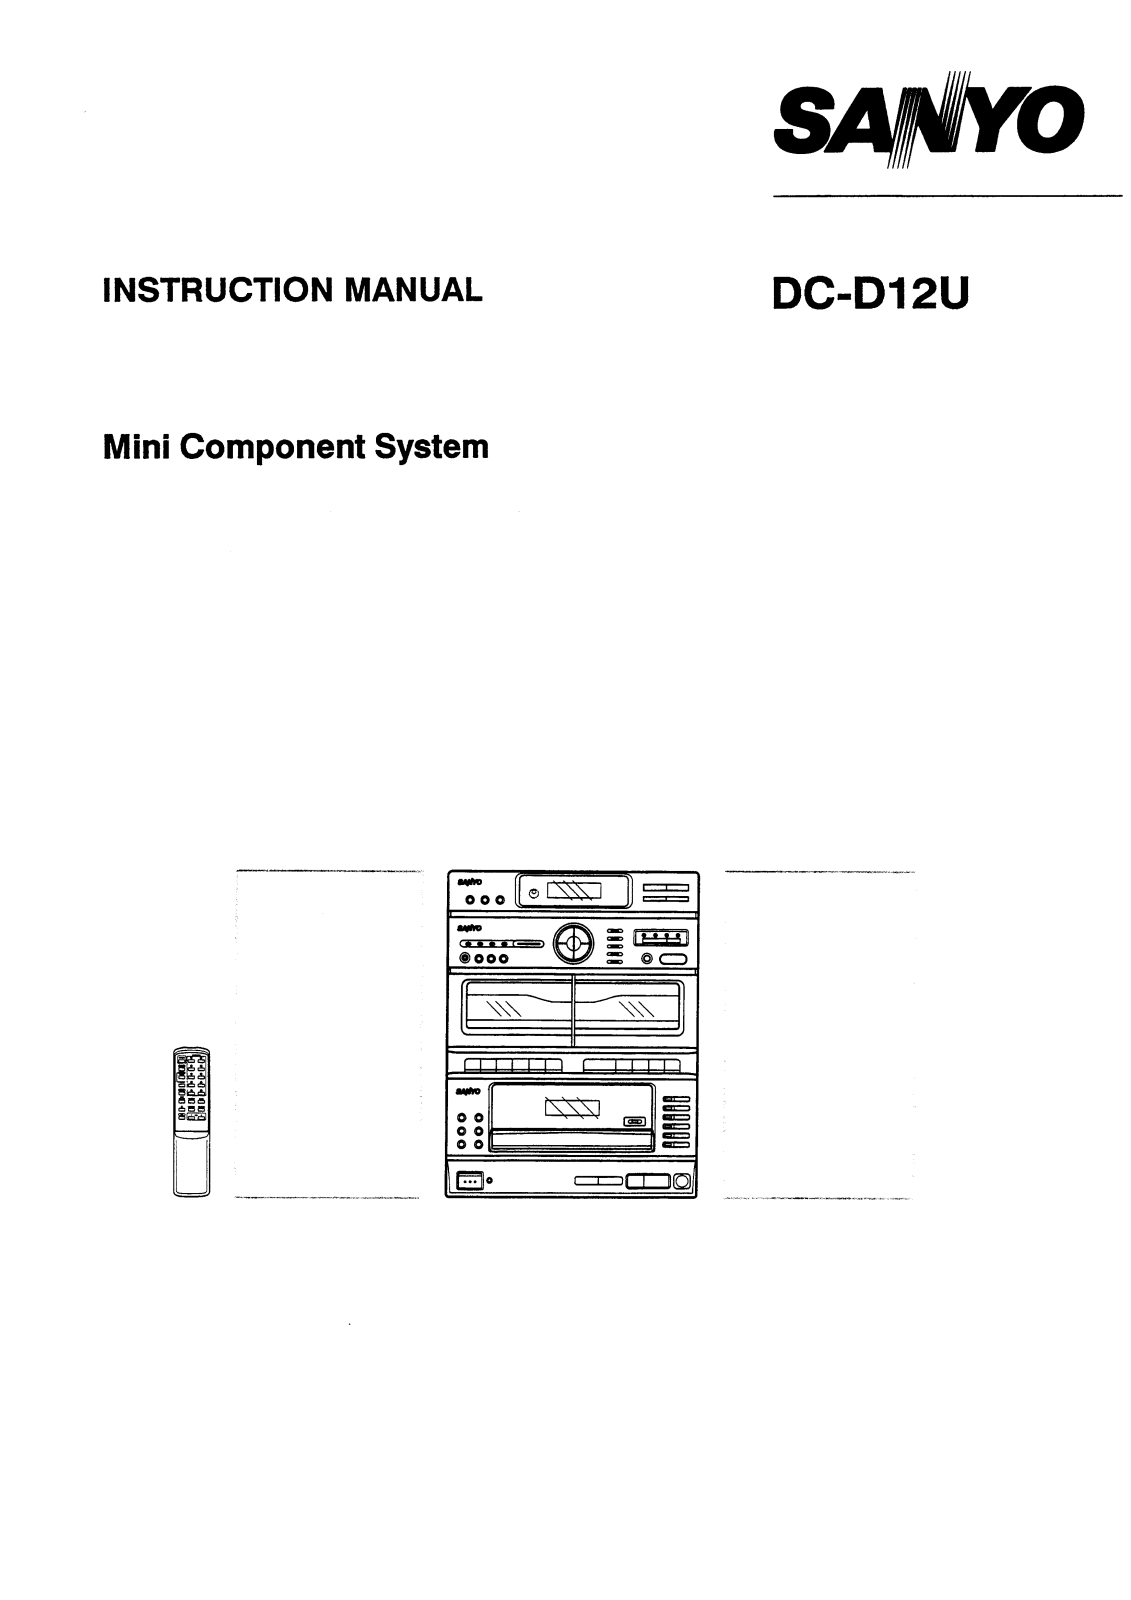 Sanyo DC-D12U Instruction Manual